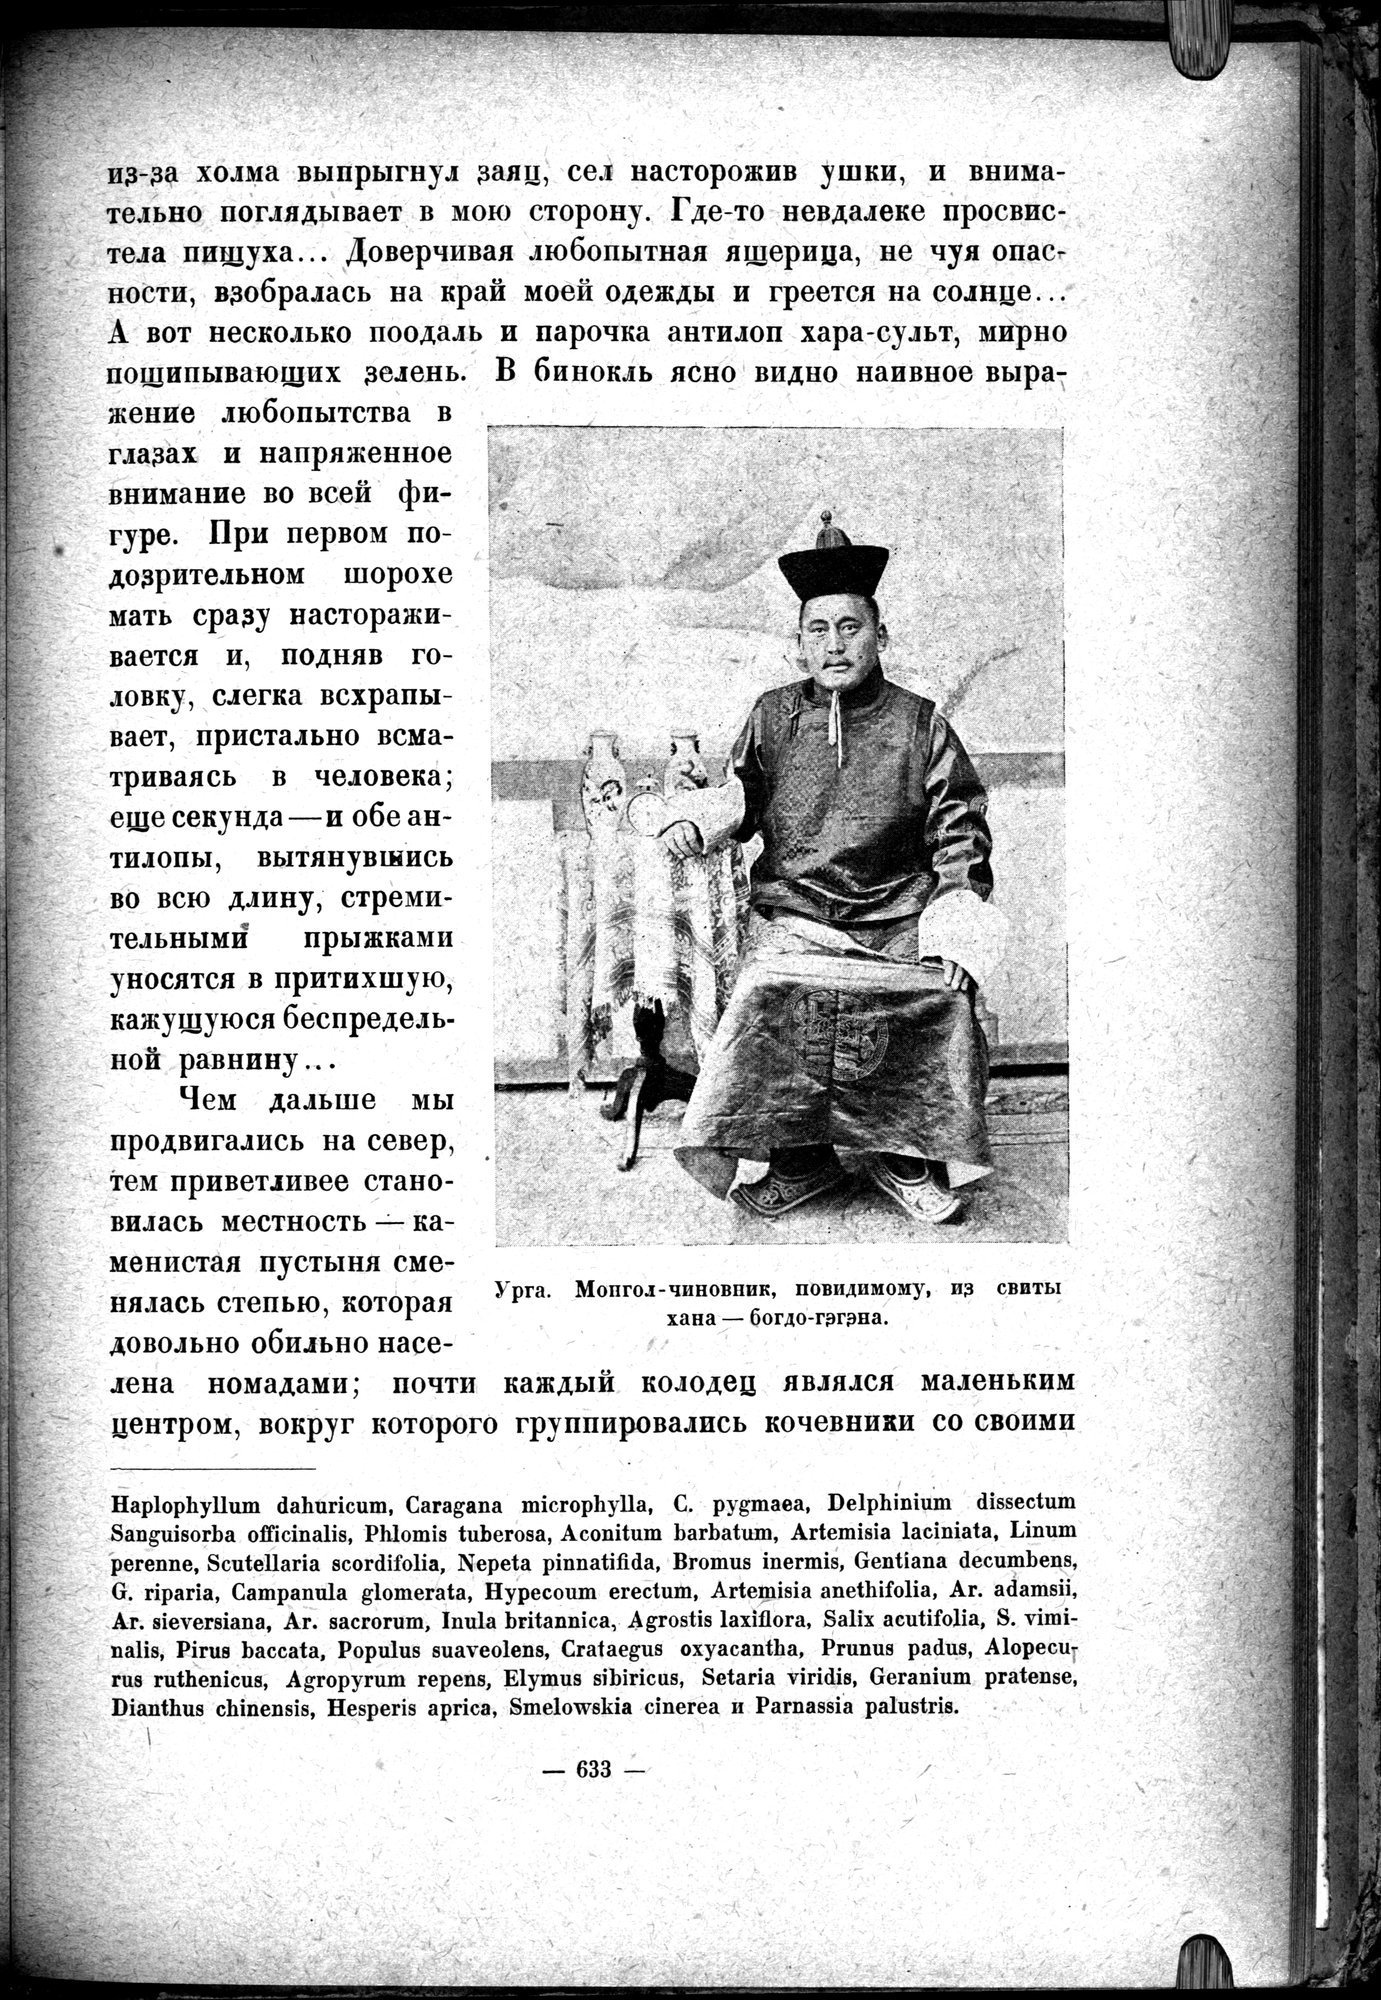 Mongoliya i Amdo i mertby gorod Khara-Khoto : vol.1 / Page 723 (Grayscale High Resolution Image)